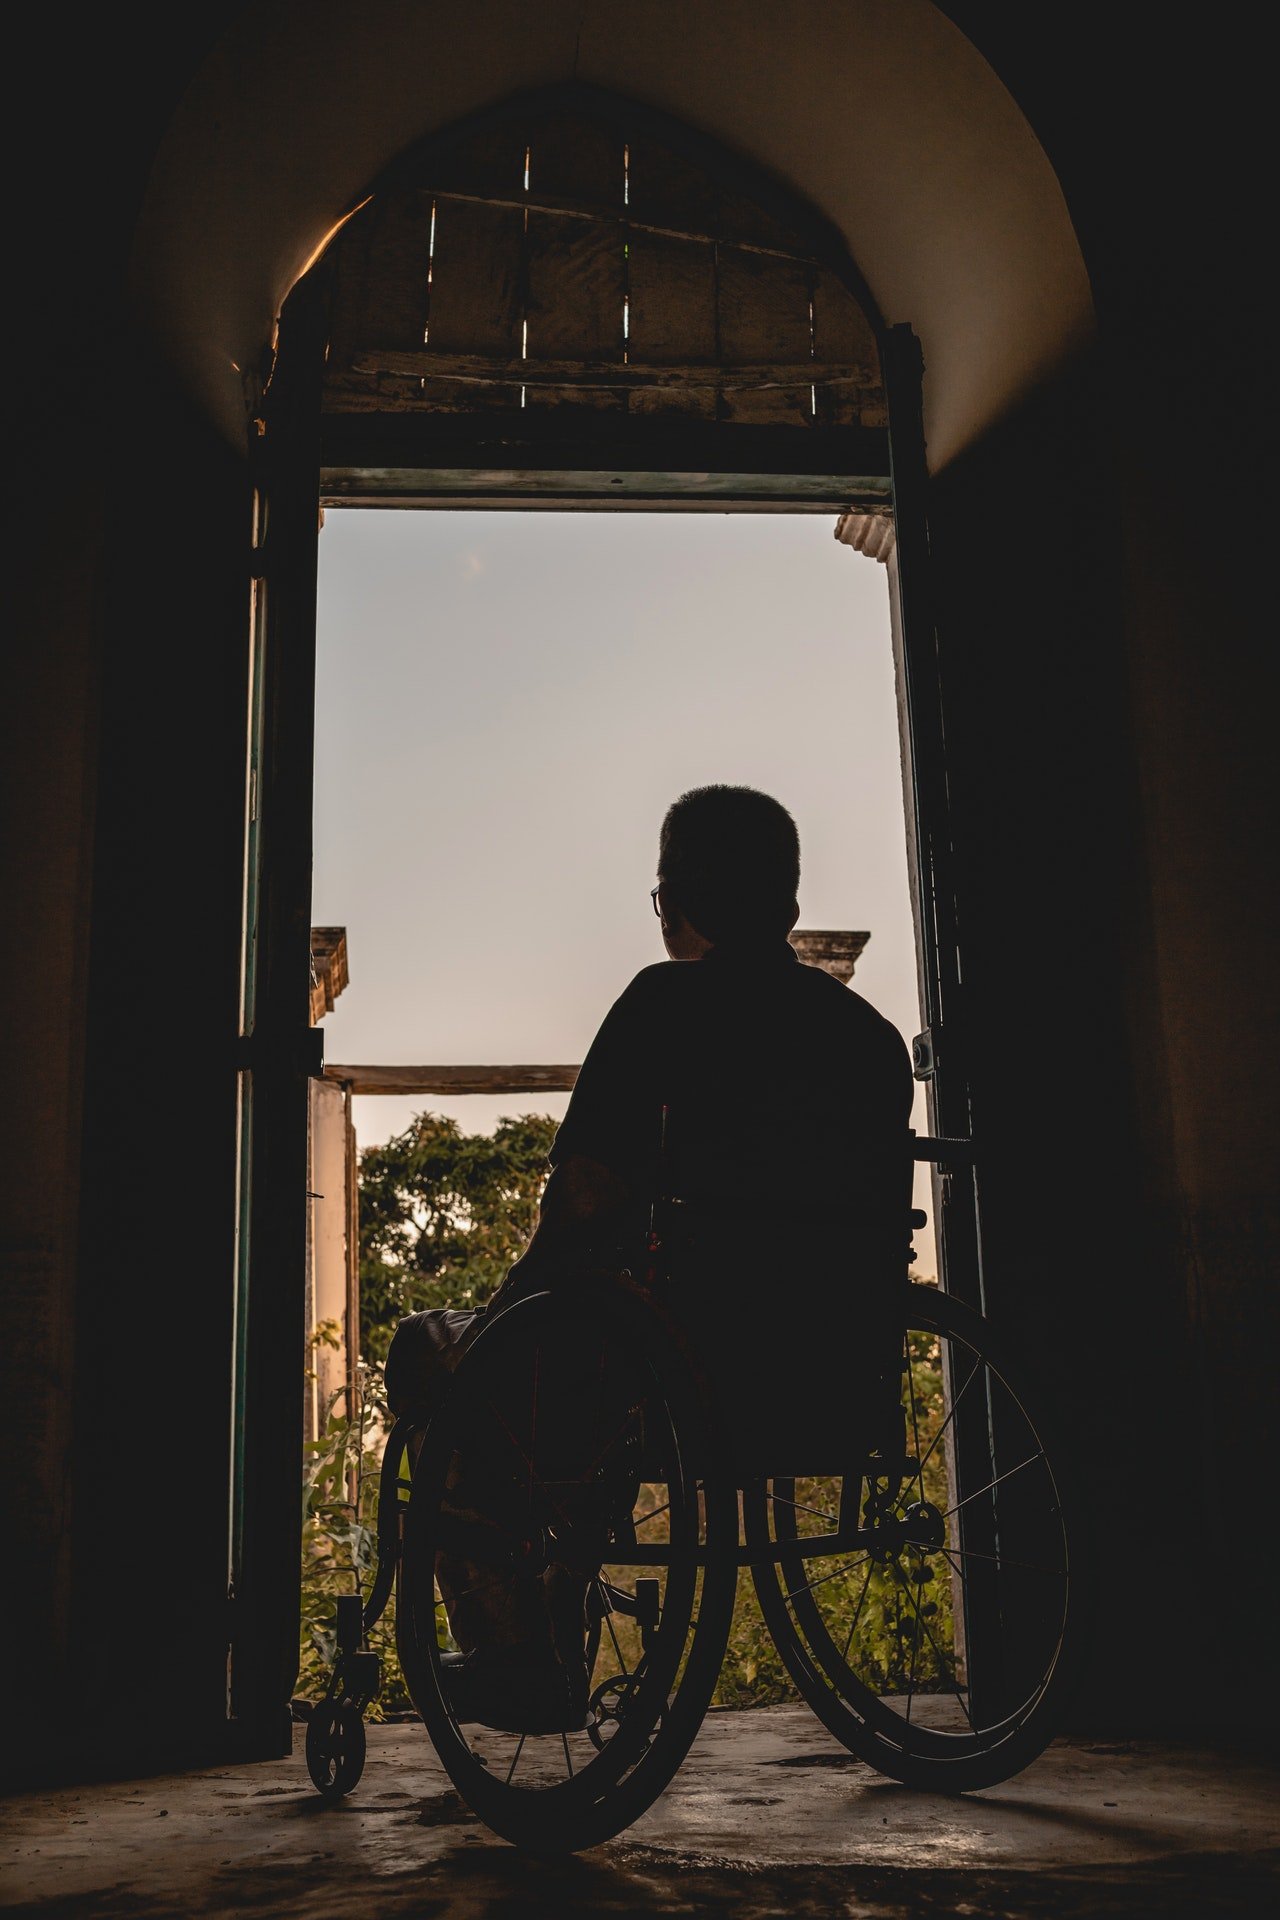 Silhouette of a man in the doorway | Photo: Pexels